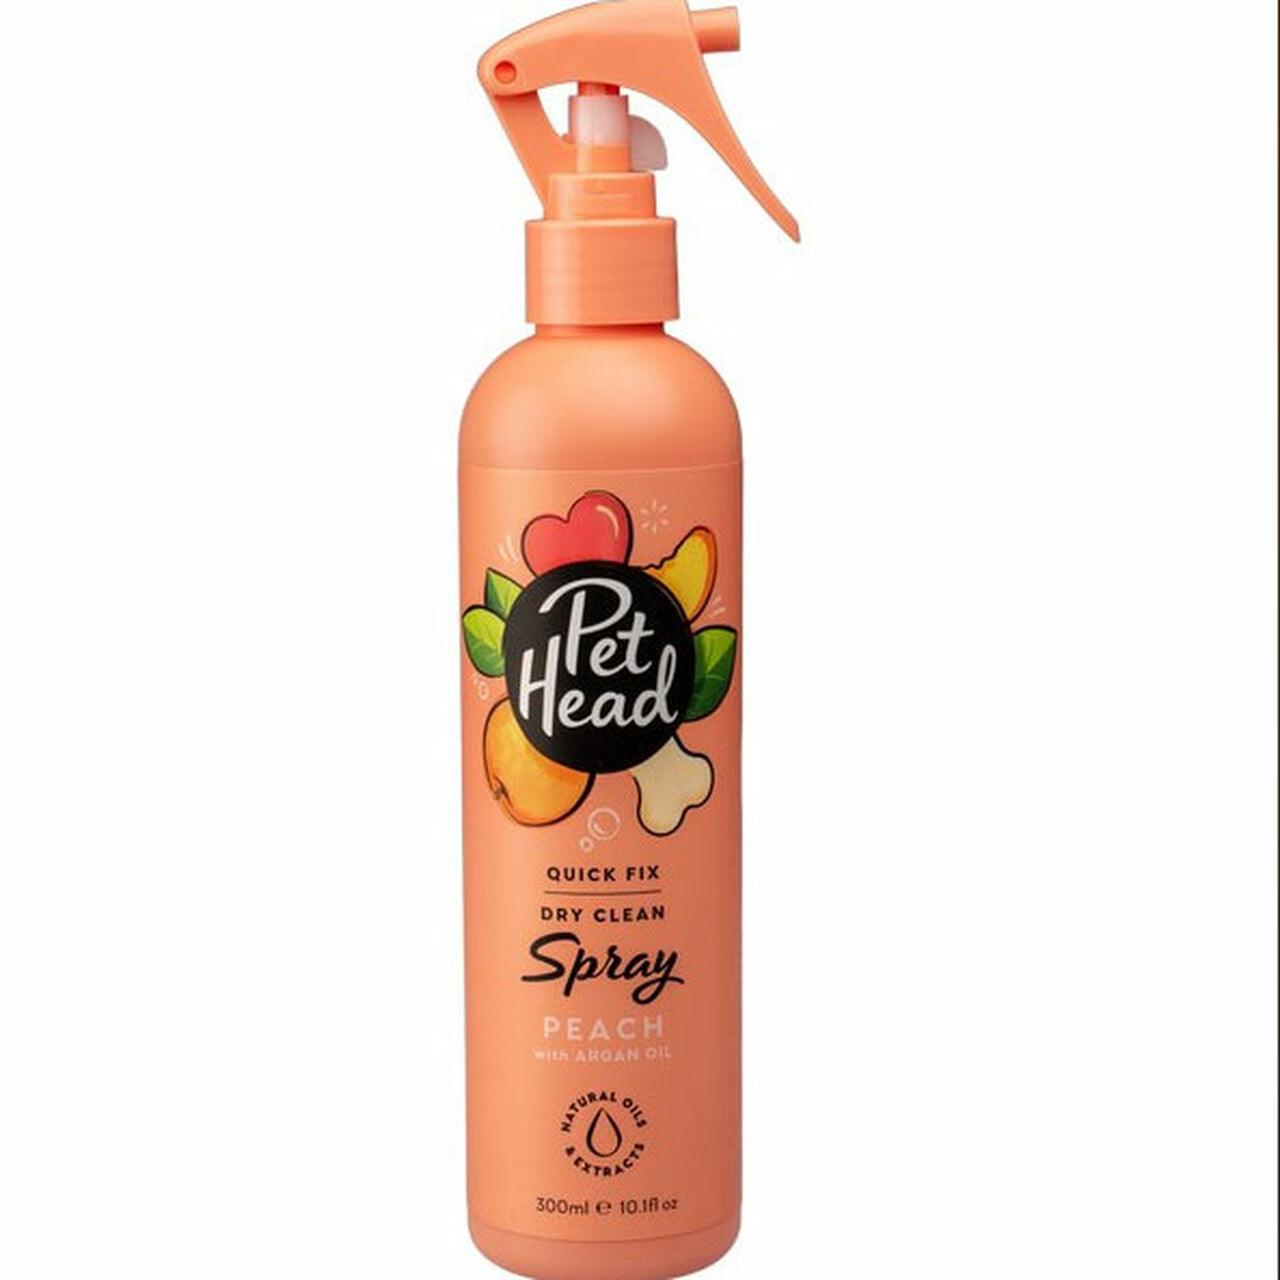 PET HEAD Quick Fix Dry Clean Spray Peach - Pets Villa